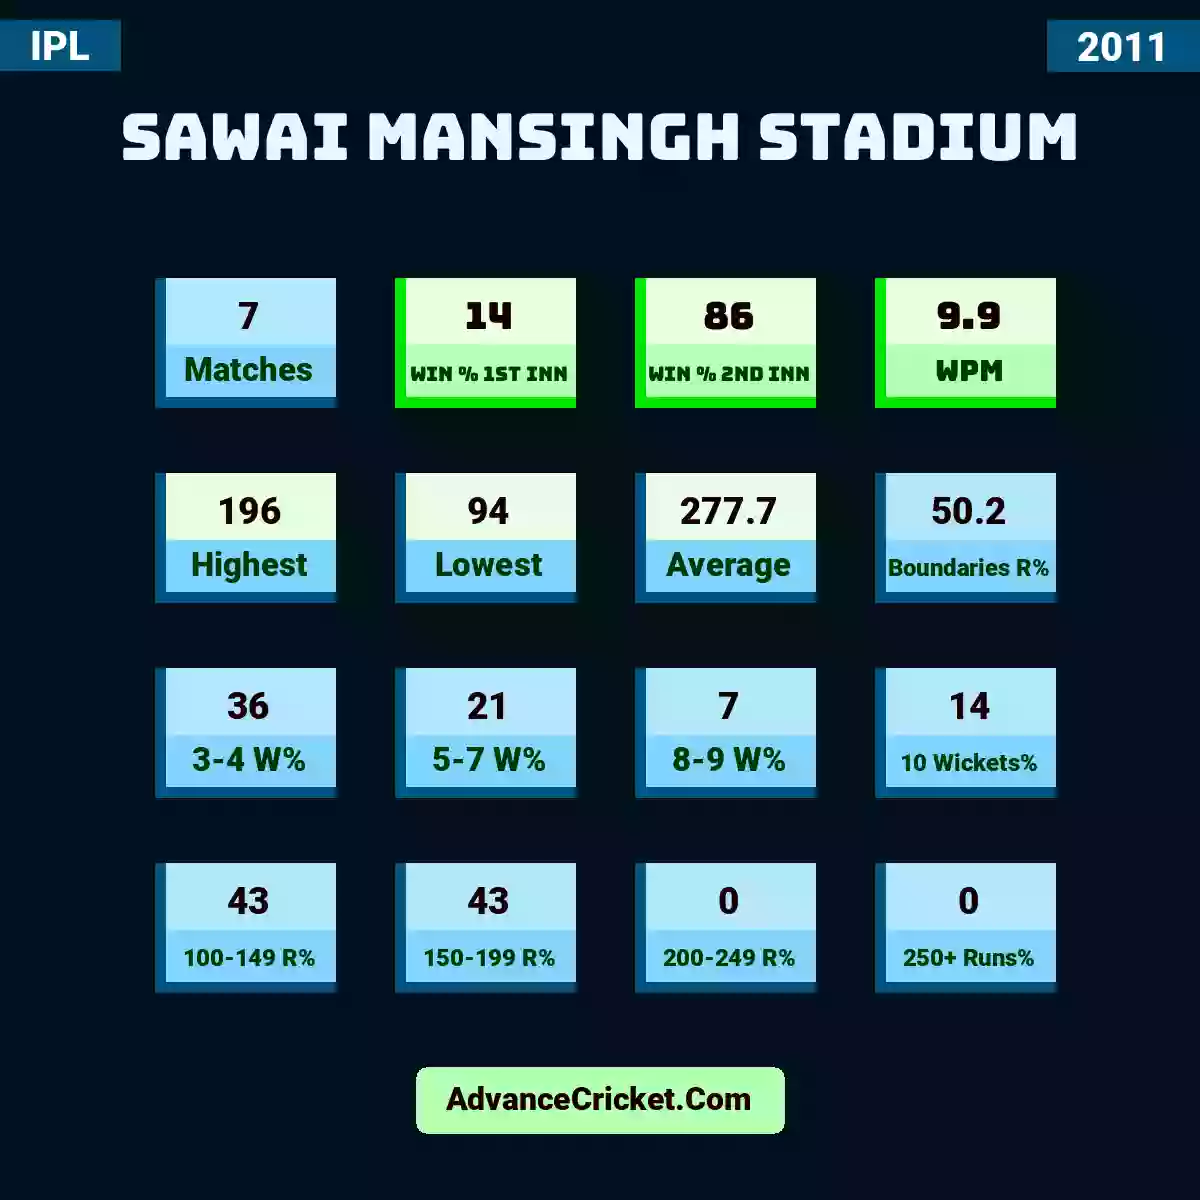 Image showing Sawai Mansingh Stadium with Matches: 7, Win % 1st Inn: 14, Win % 2nd Inn: 86, WPM: 9.9, Highest: 196, Lowest: 94, Average: 277.7, Boundaries R%: 50.2, 3-4 W%: 36, 5-7 W%: 21, 8-9 W%: 7, 10 Wickets%: 14, 100-149 R%: 43, 150-199 R%: 43, 200-249 R%: 0, 250+ Runs%: 0.